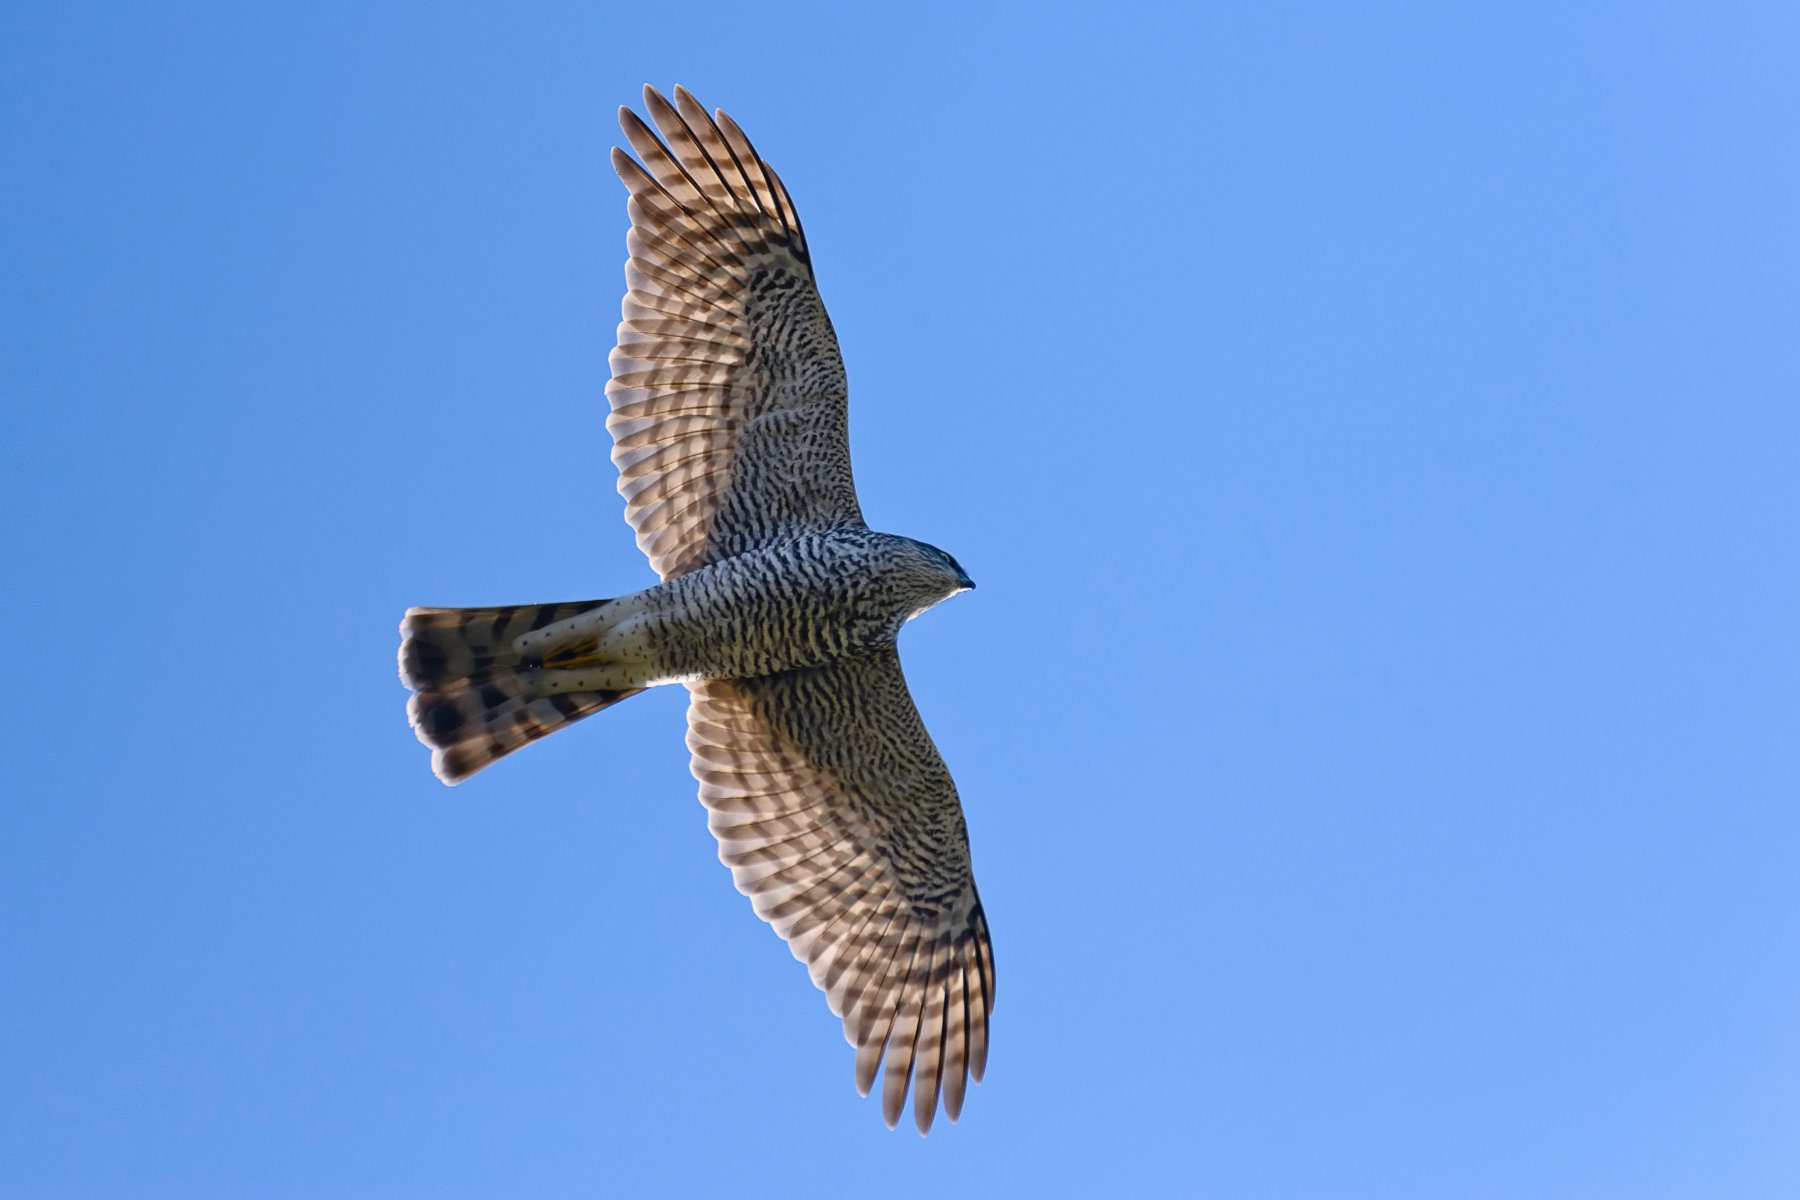 Sparrow Hawk flying in blue sky